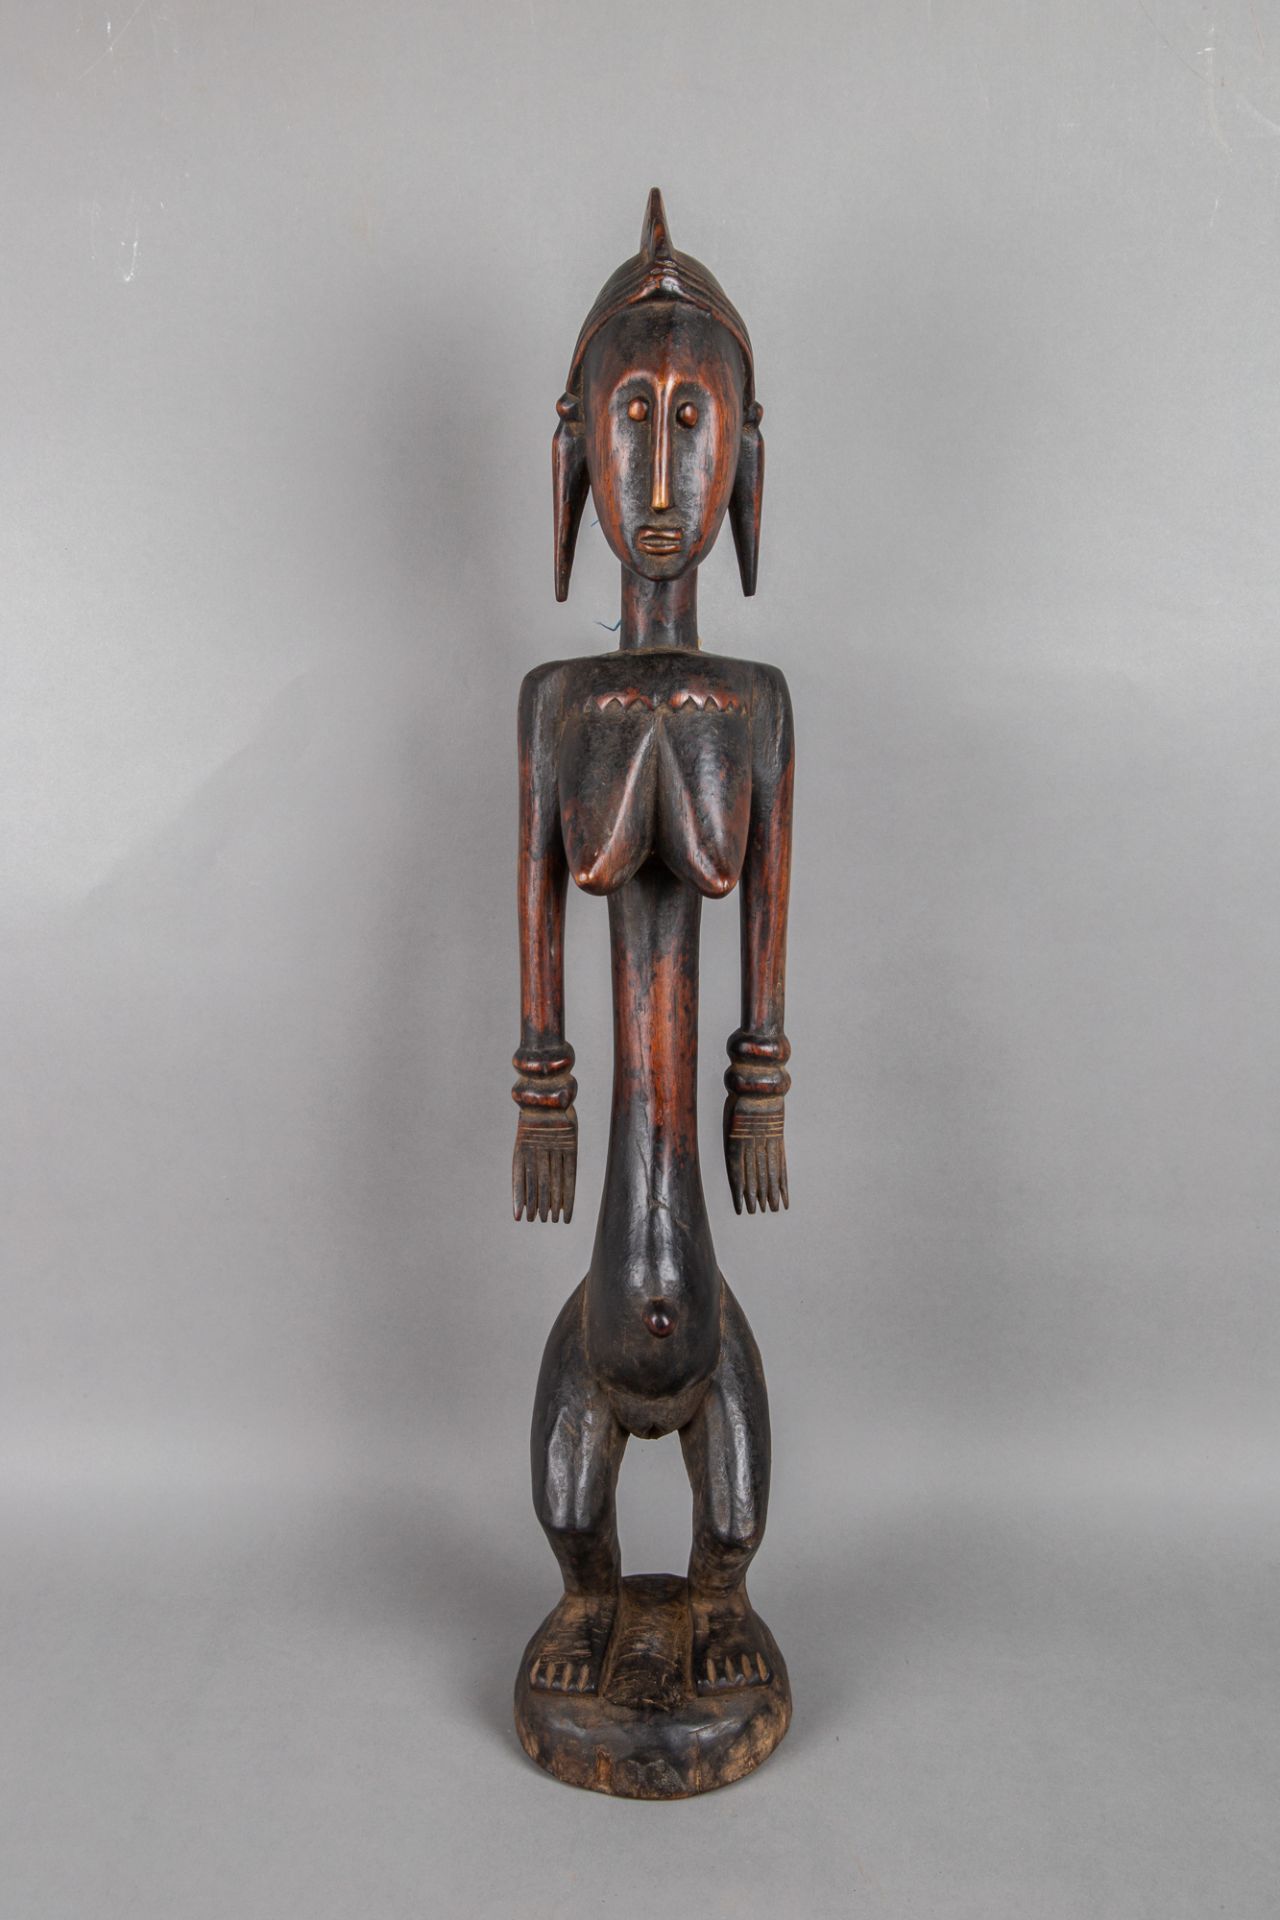 Stehende weibliche Figur 'jo nyeleni', Holz, Bamana, Mali